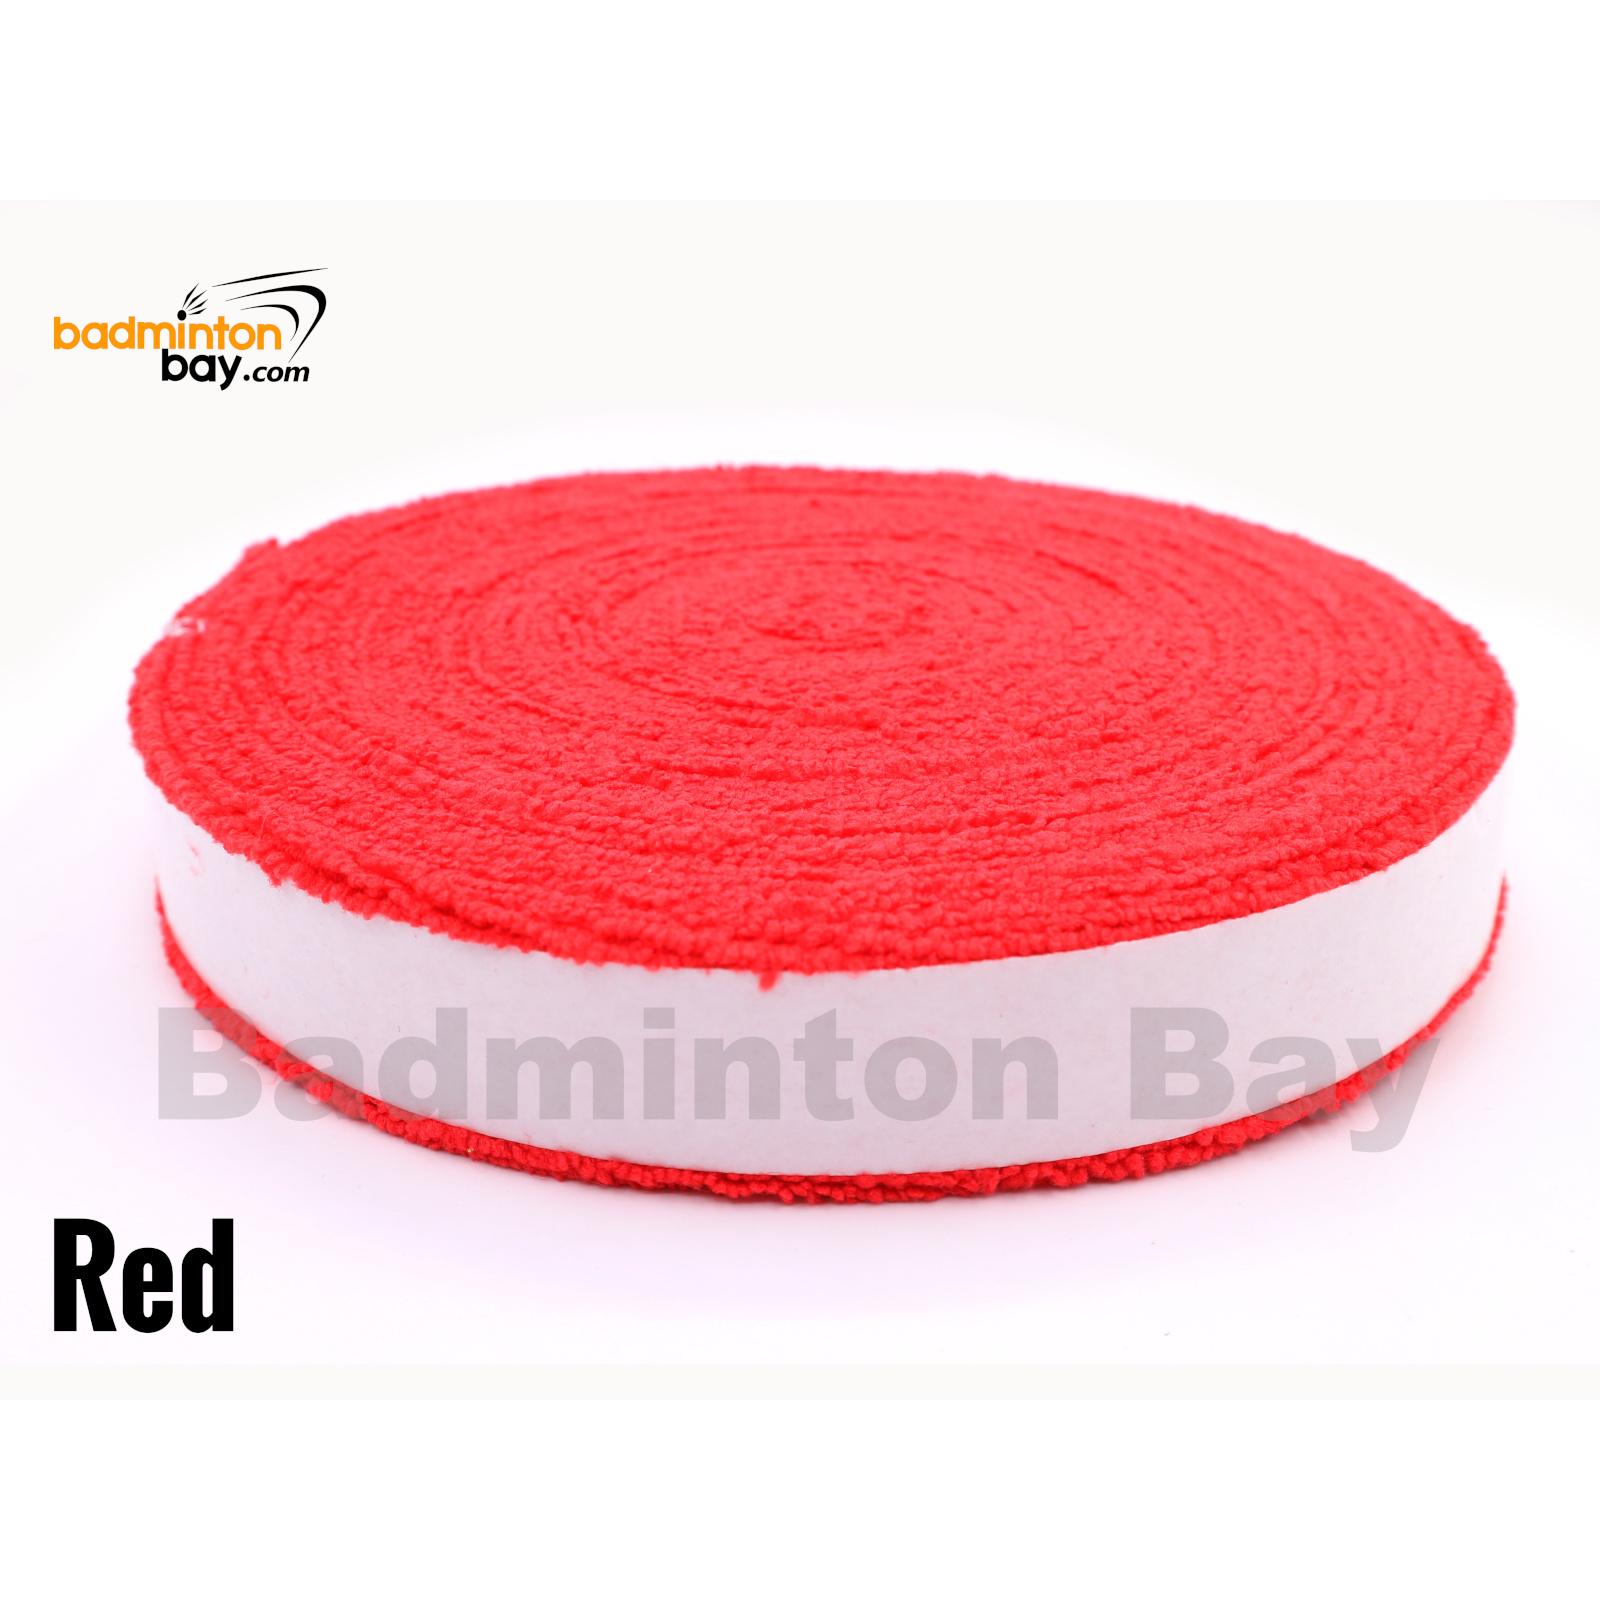 10M Cotton Towel Grip Tape for Tennis Squash Badminton Racquet Racket Over Grips 